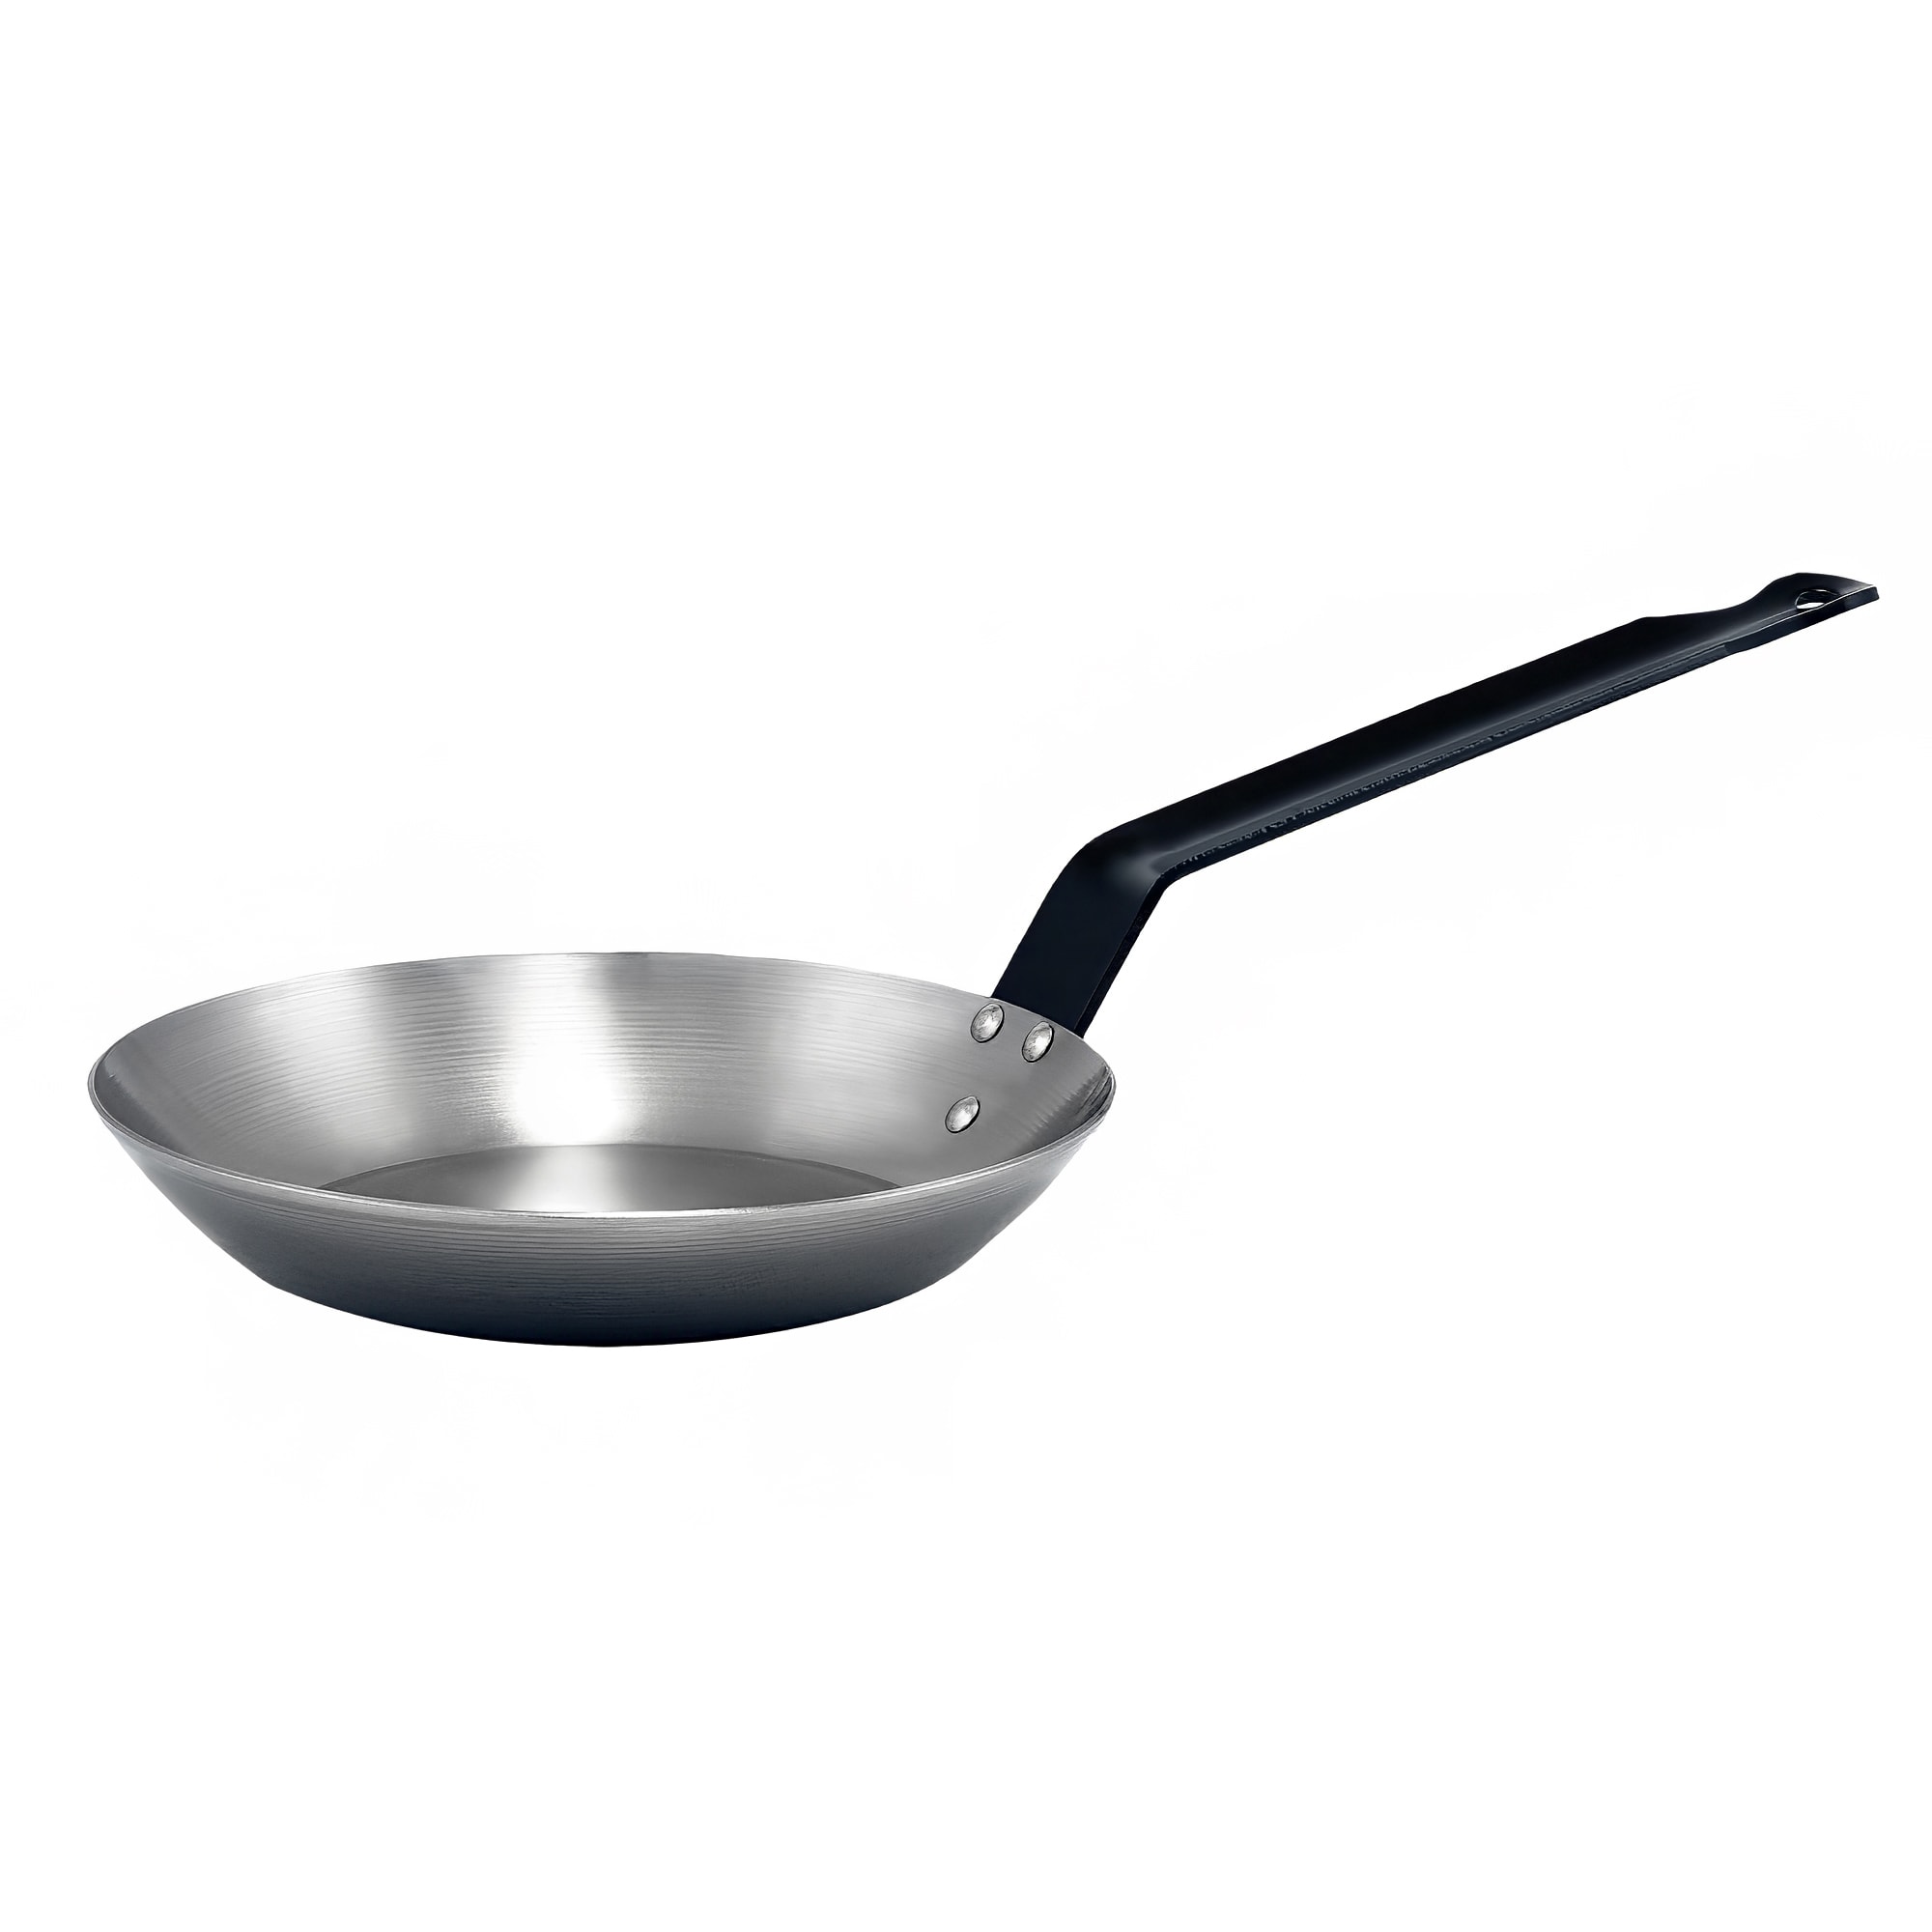 BK Carbon Steel Non Stick Frying Pan Frying Pan / Skillet & Reviews